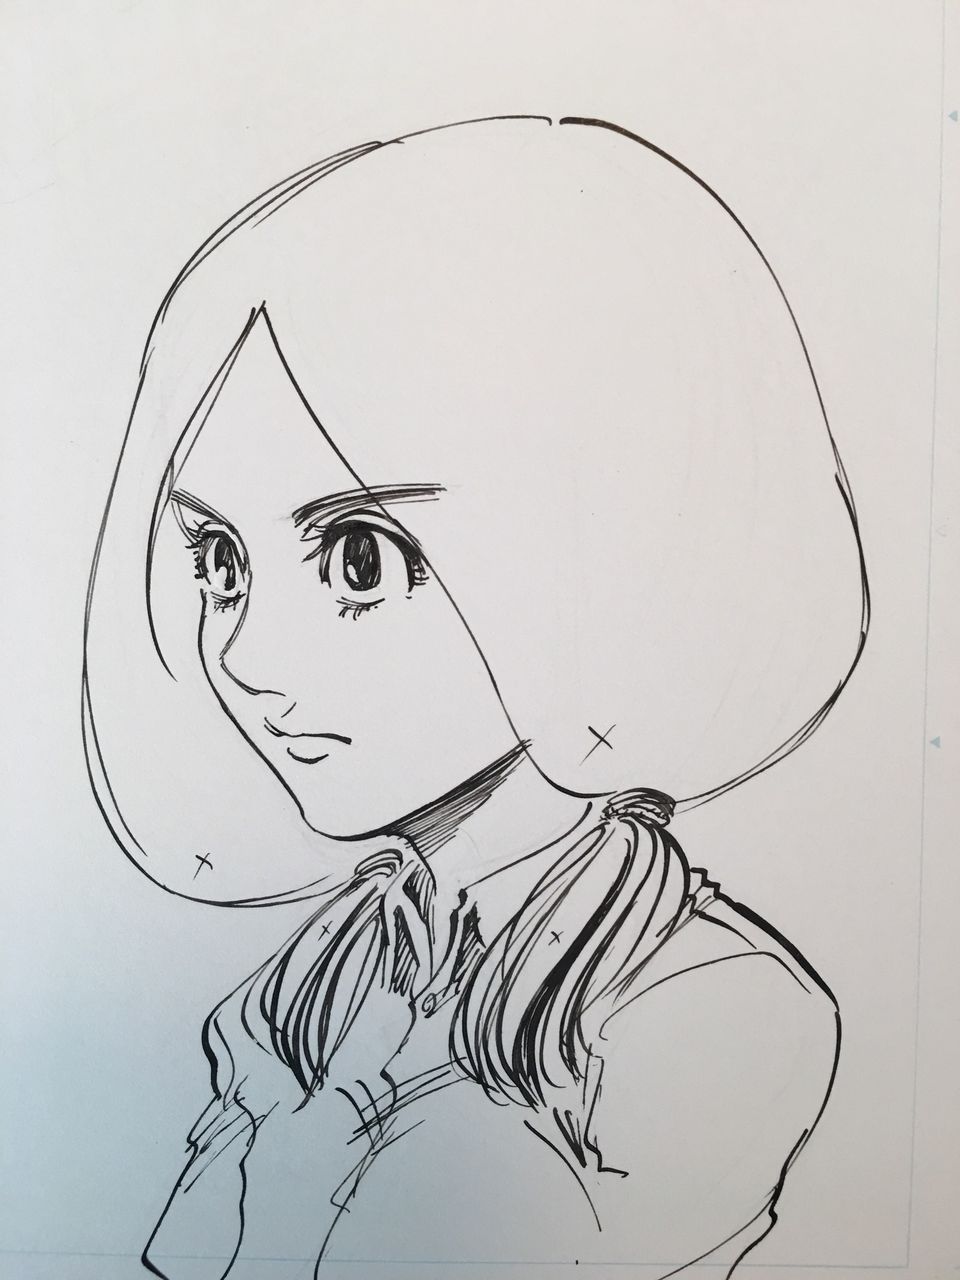 Isayama Hajime shares sketches of Ian and Mina from Shingeki no Kyojin on his blog!Past